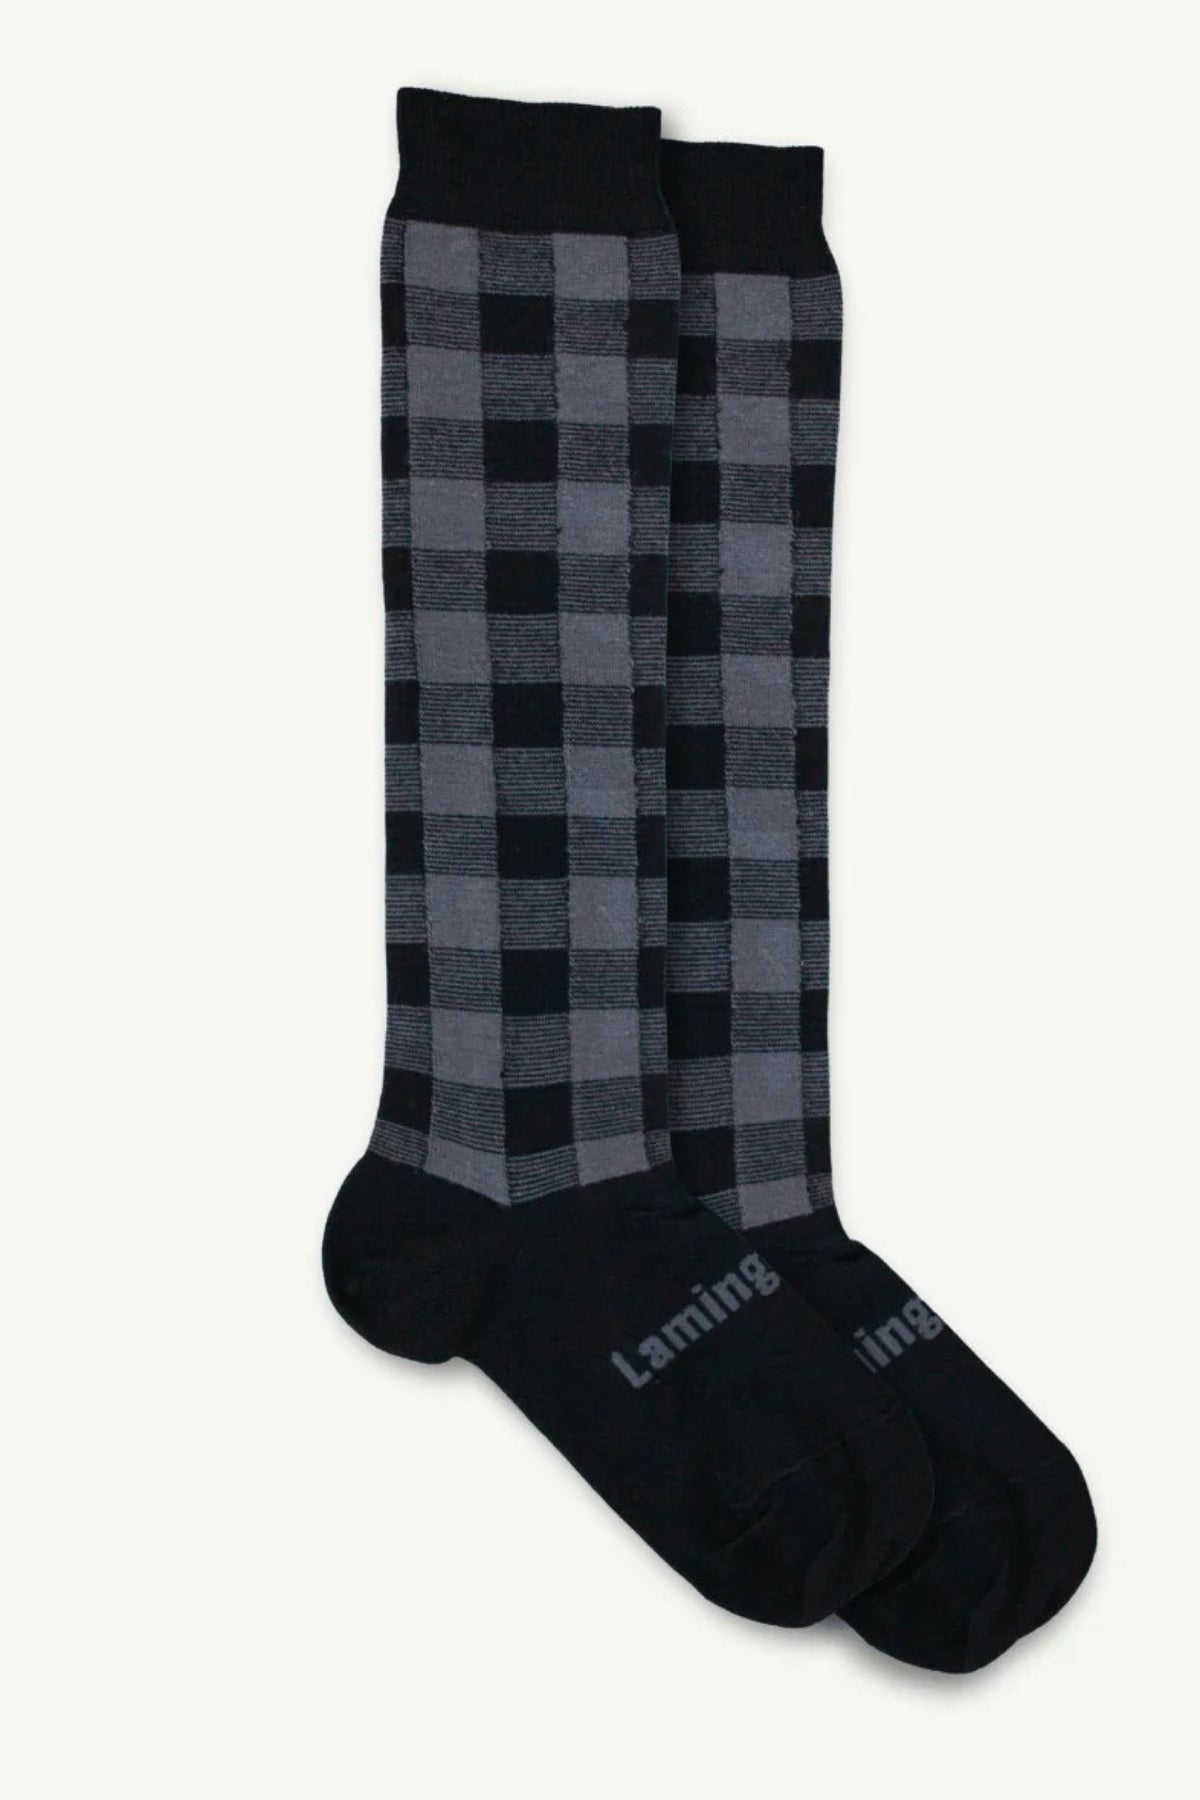 Merino Wool Knee High Socks Rupert